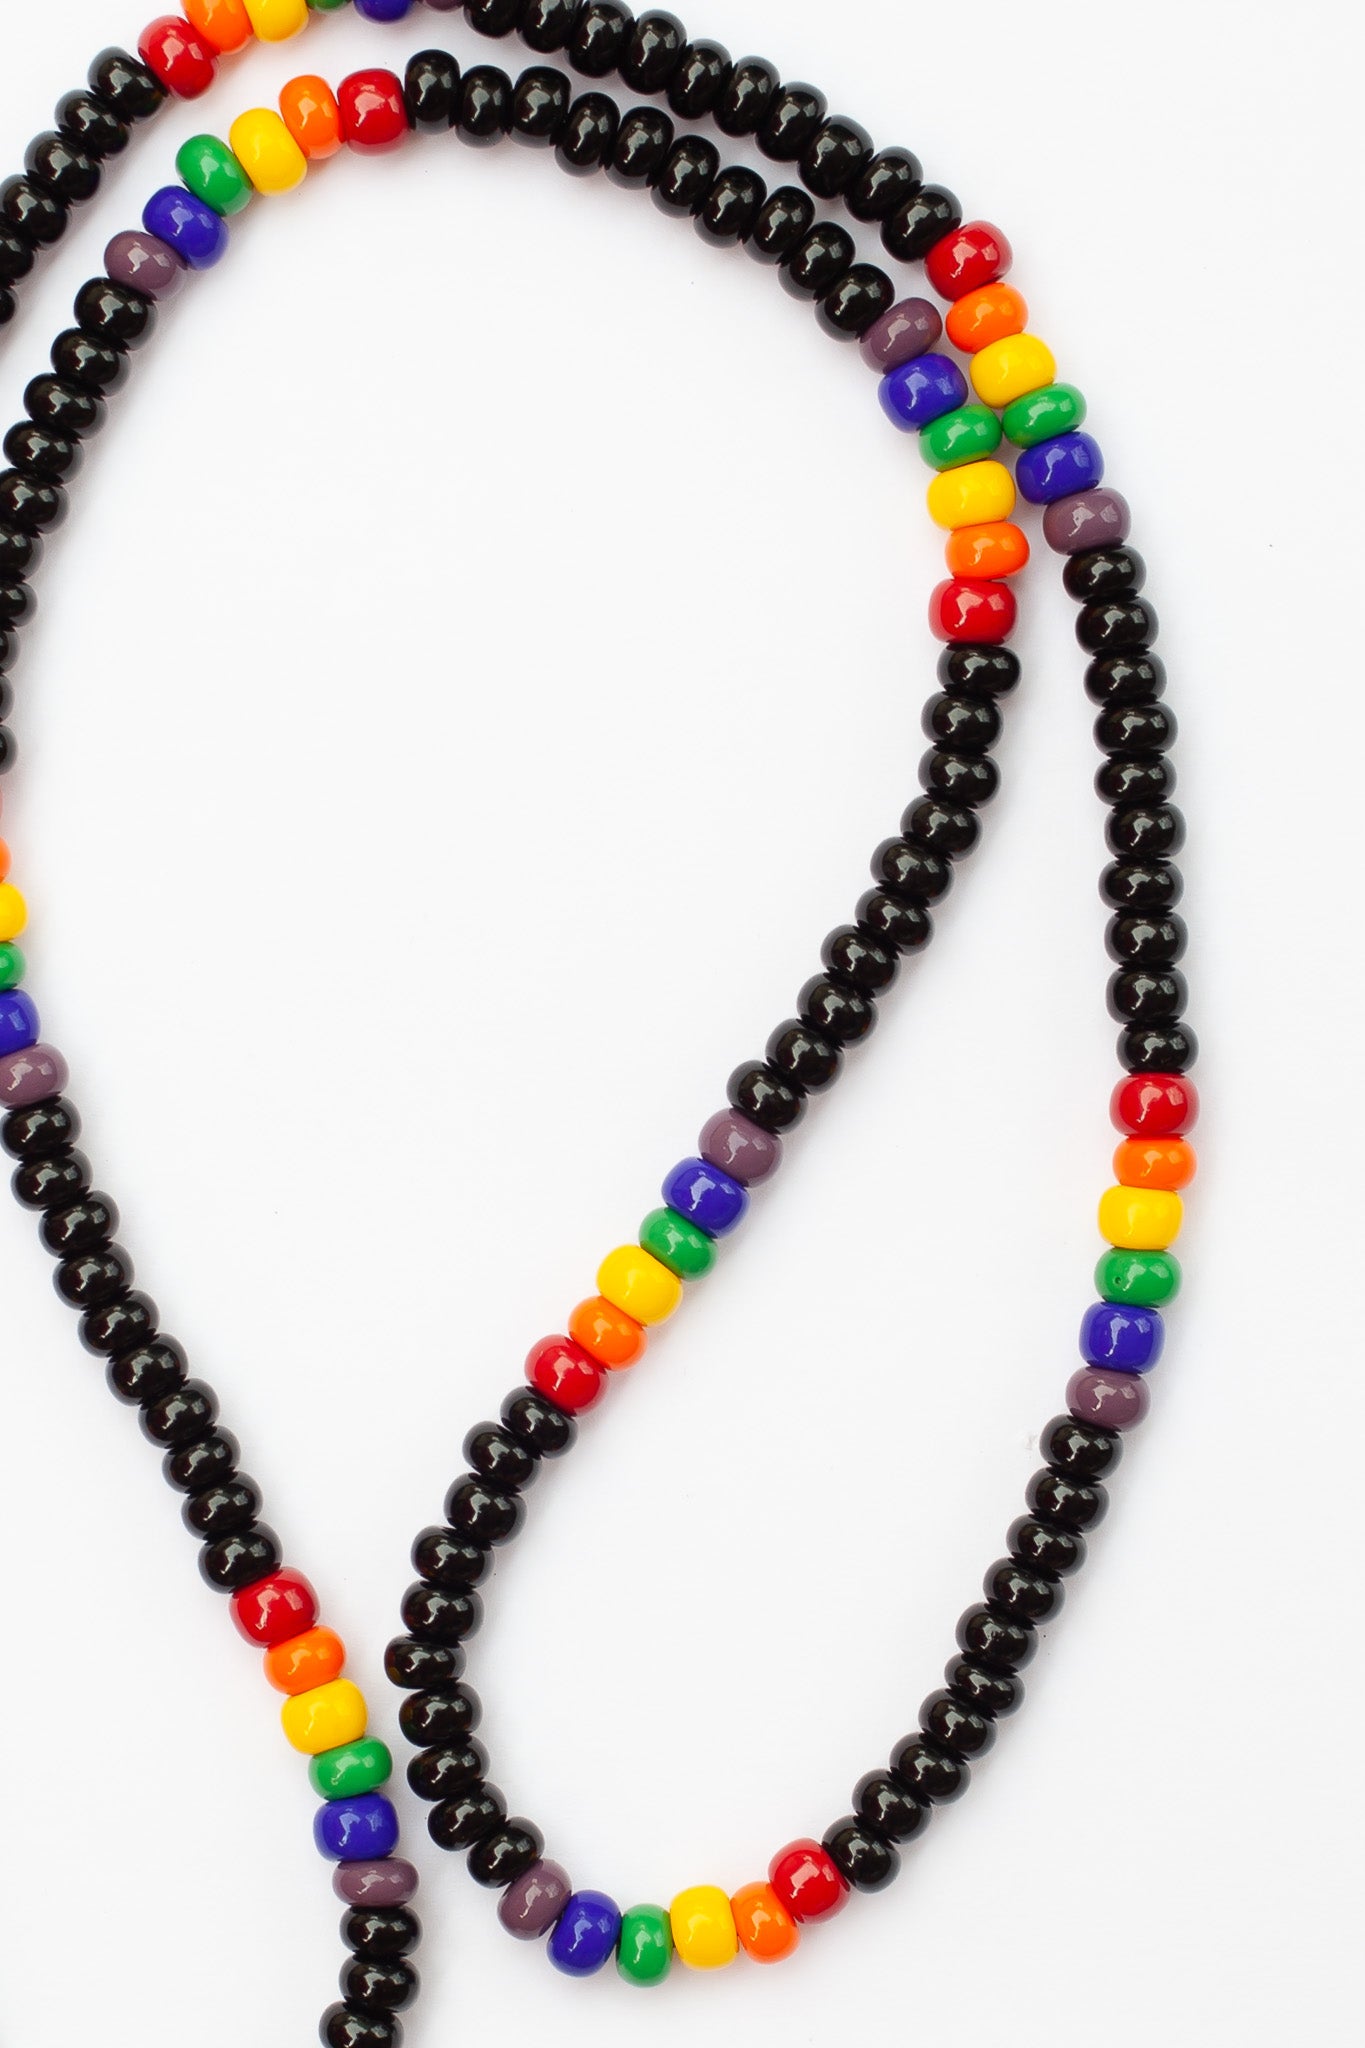 28" Long Black Unisex Pride Rainbow Beaded Necklace - My Urban Gems